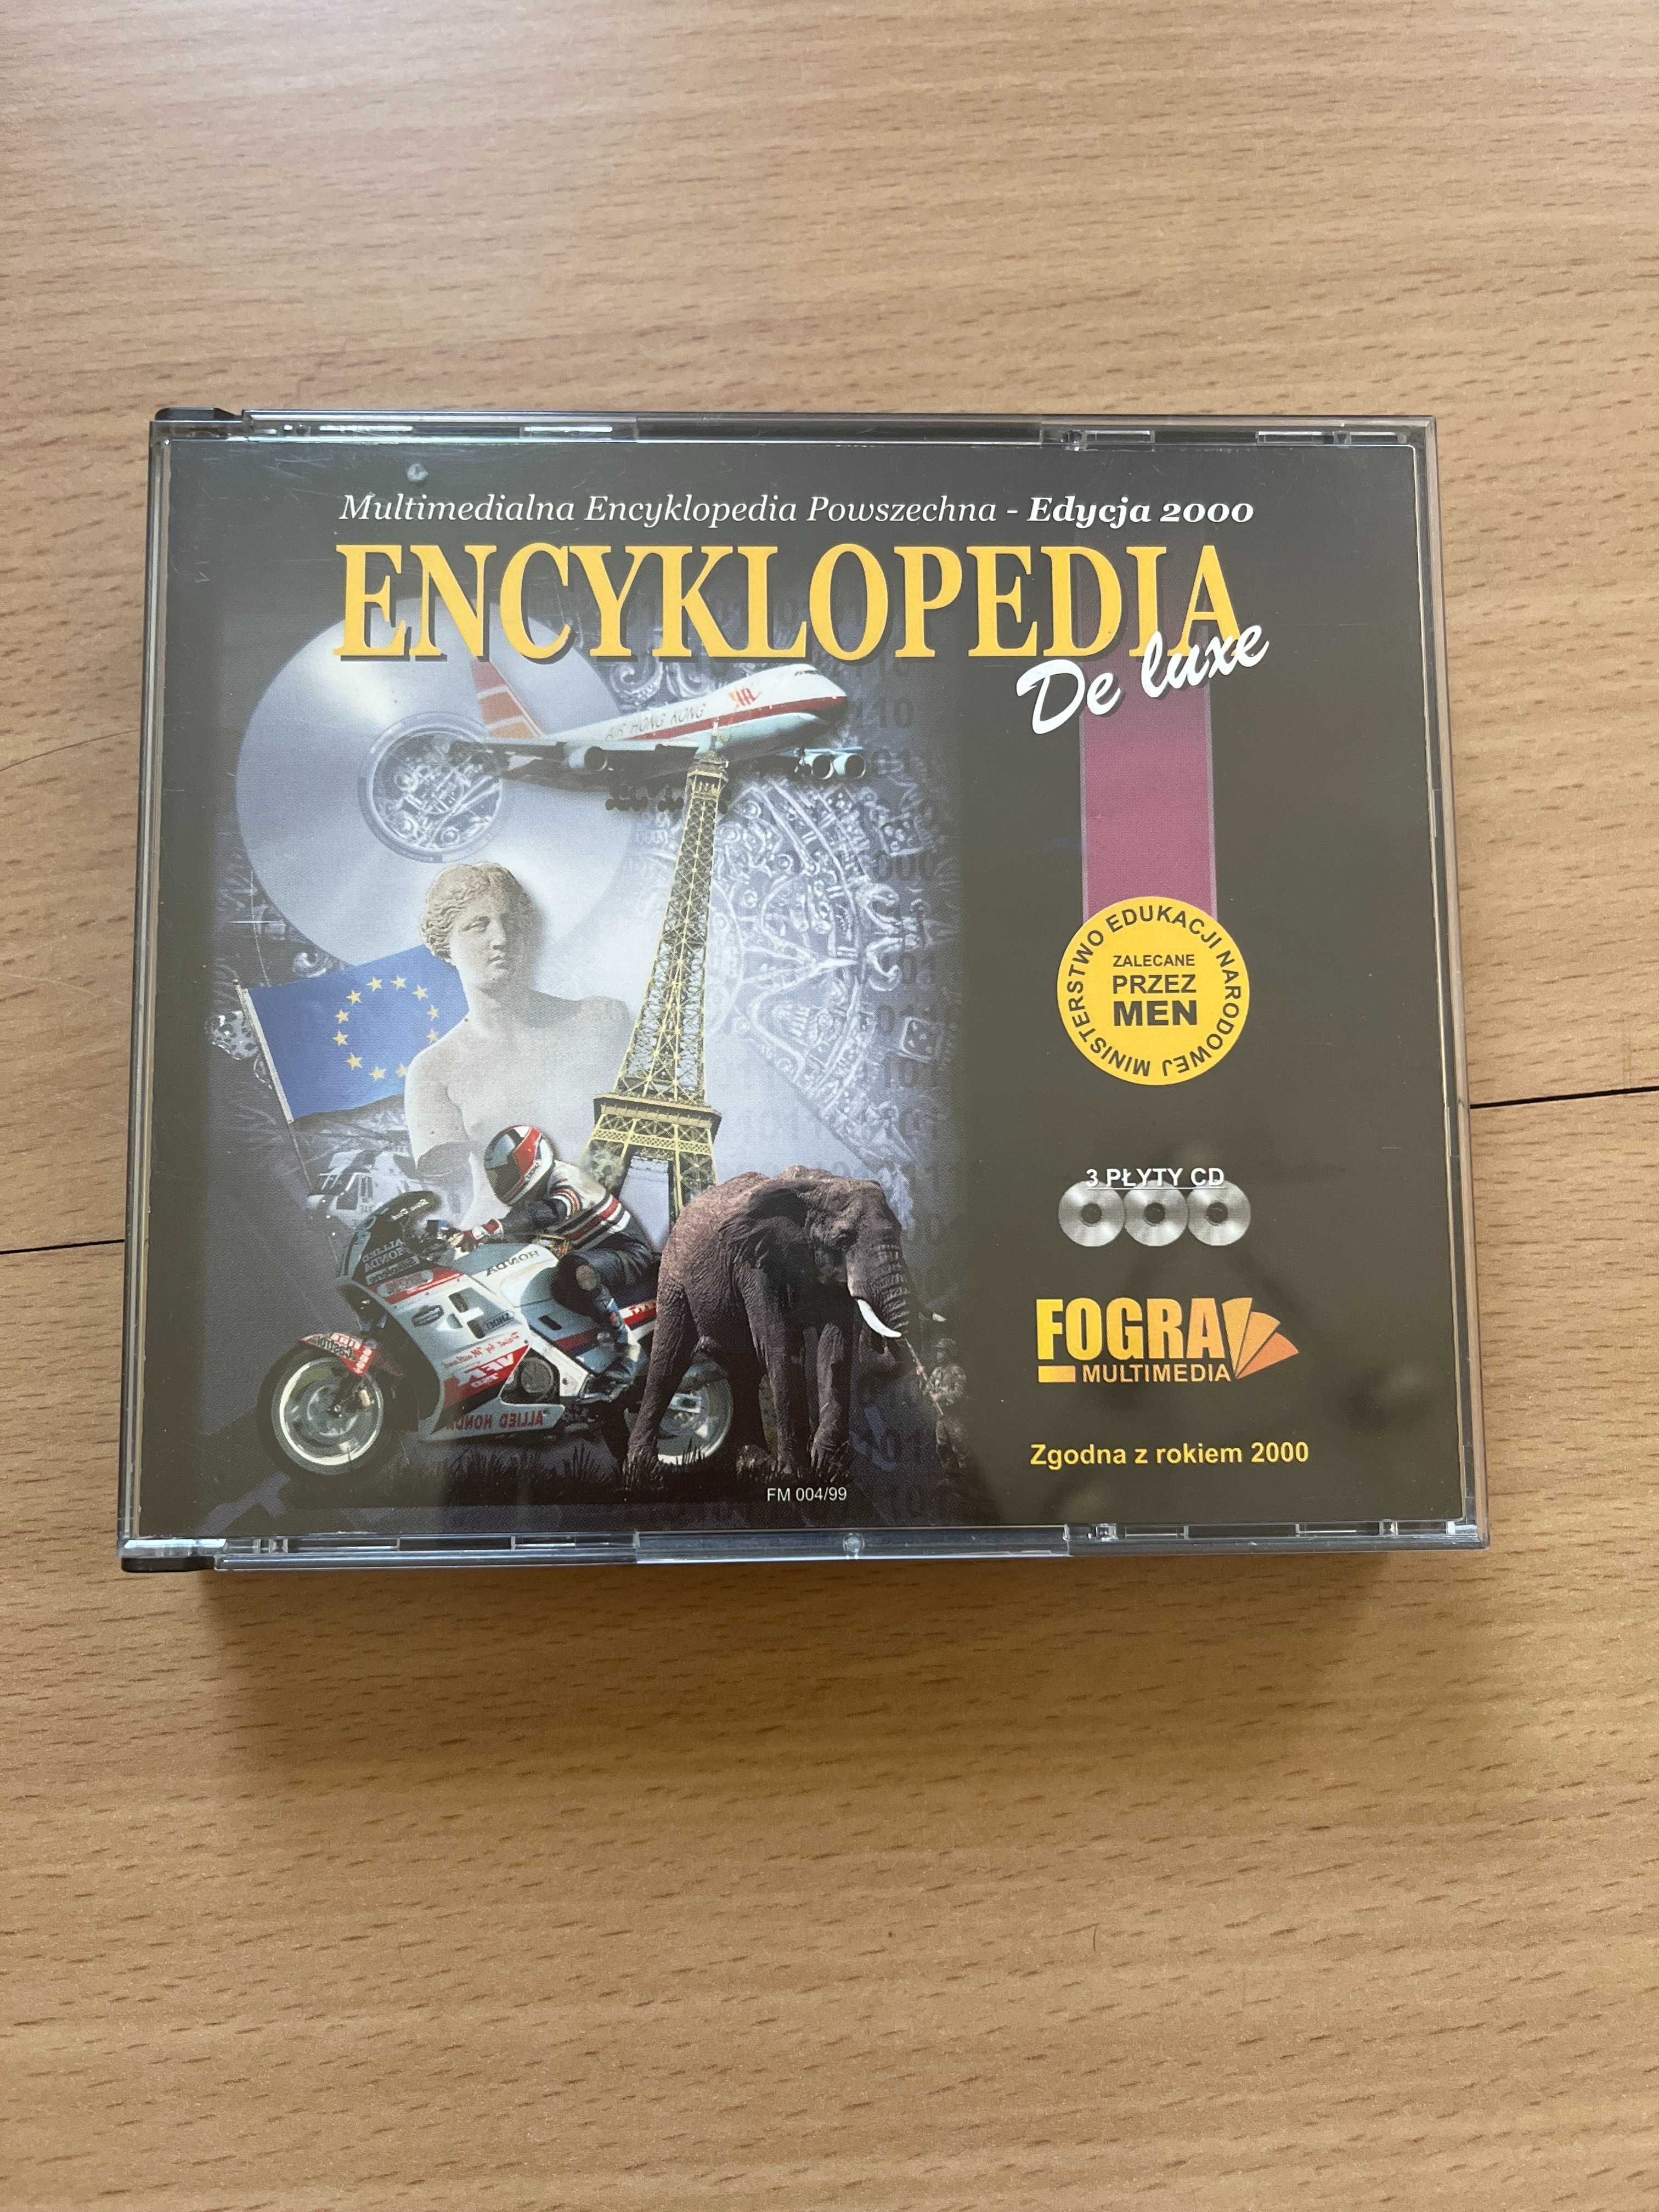 Multimedia encyklopedia De lux 2000, Fogra